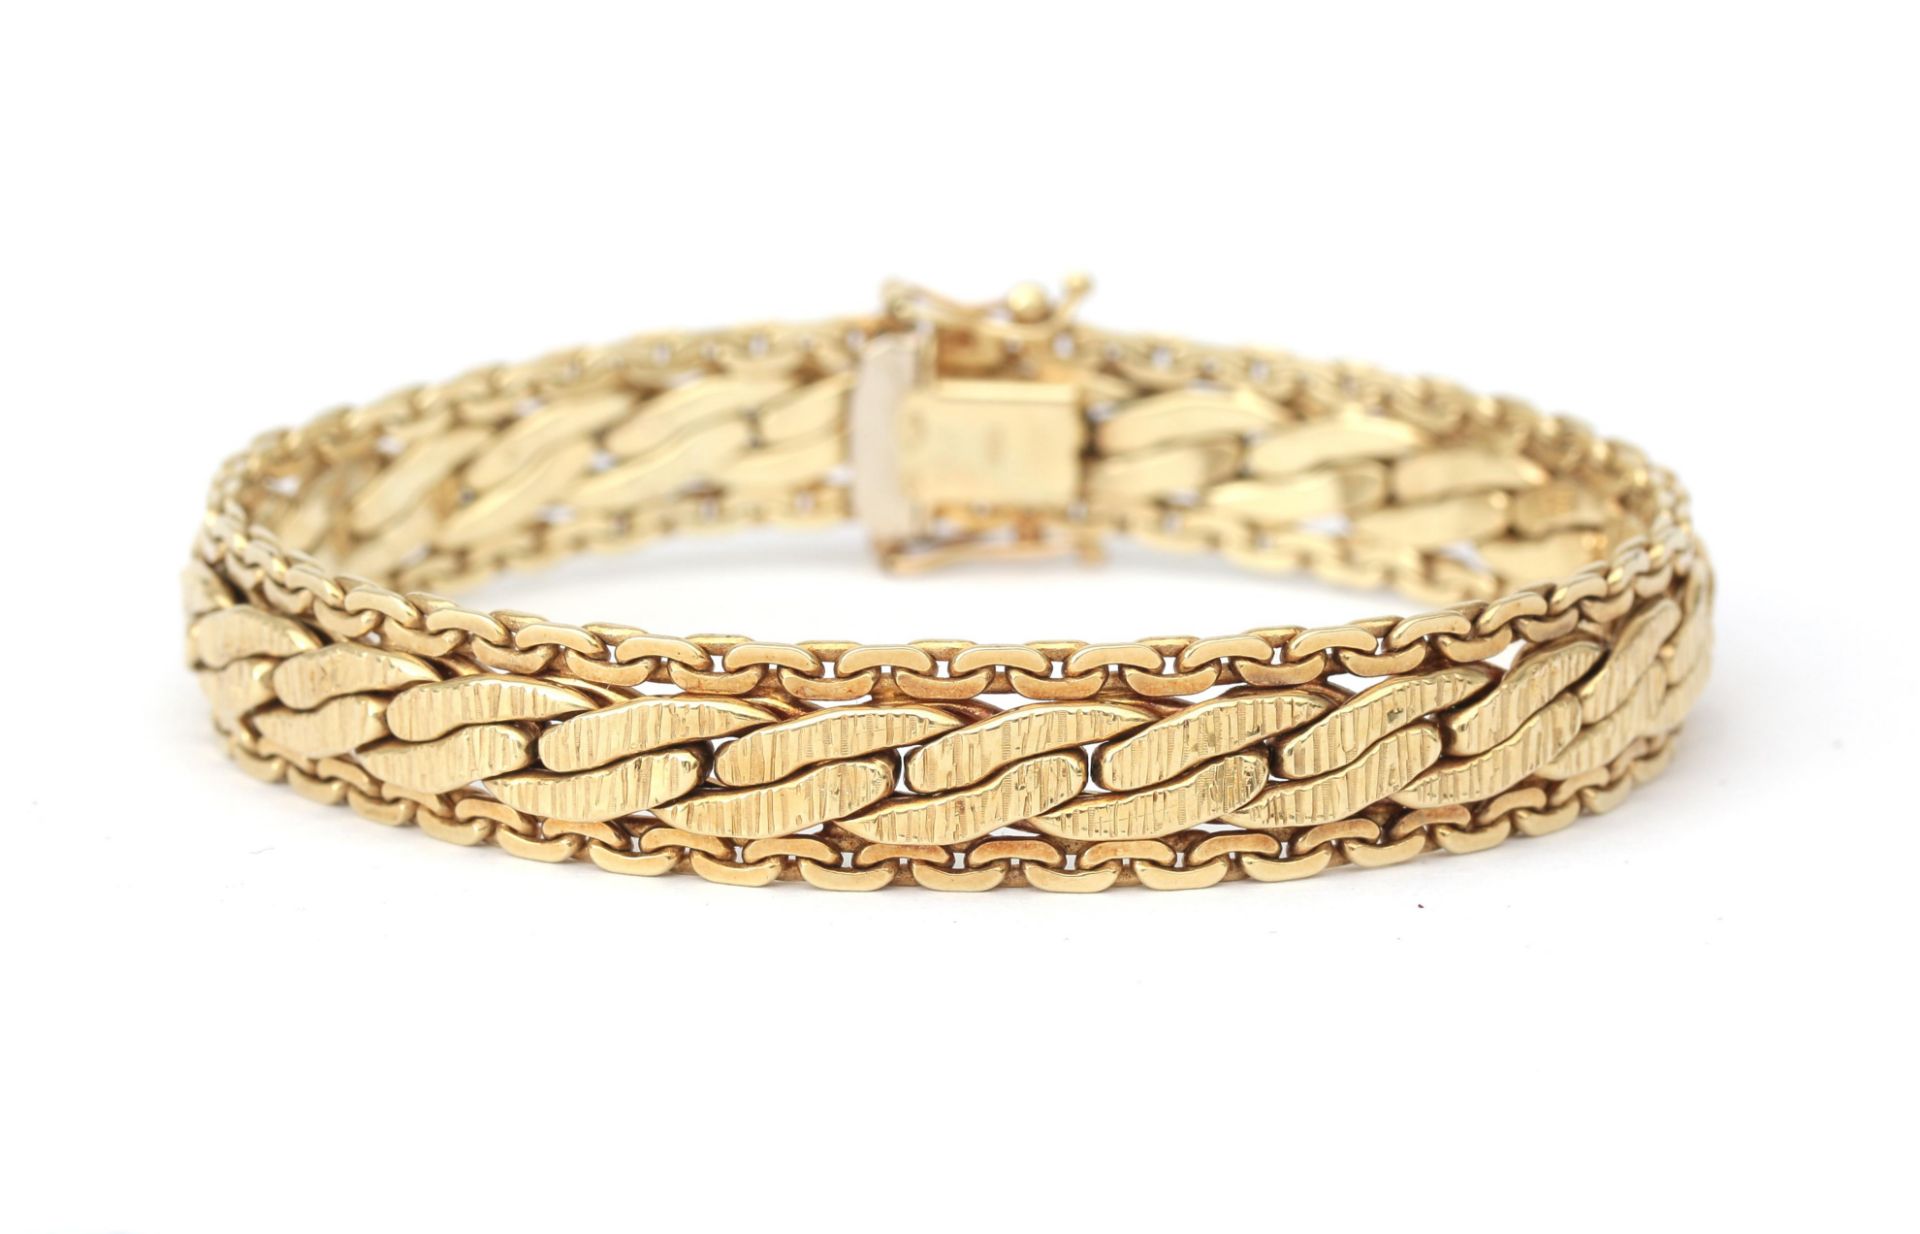 A 14 kt gold mixed link bracelet